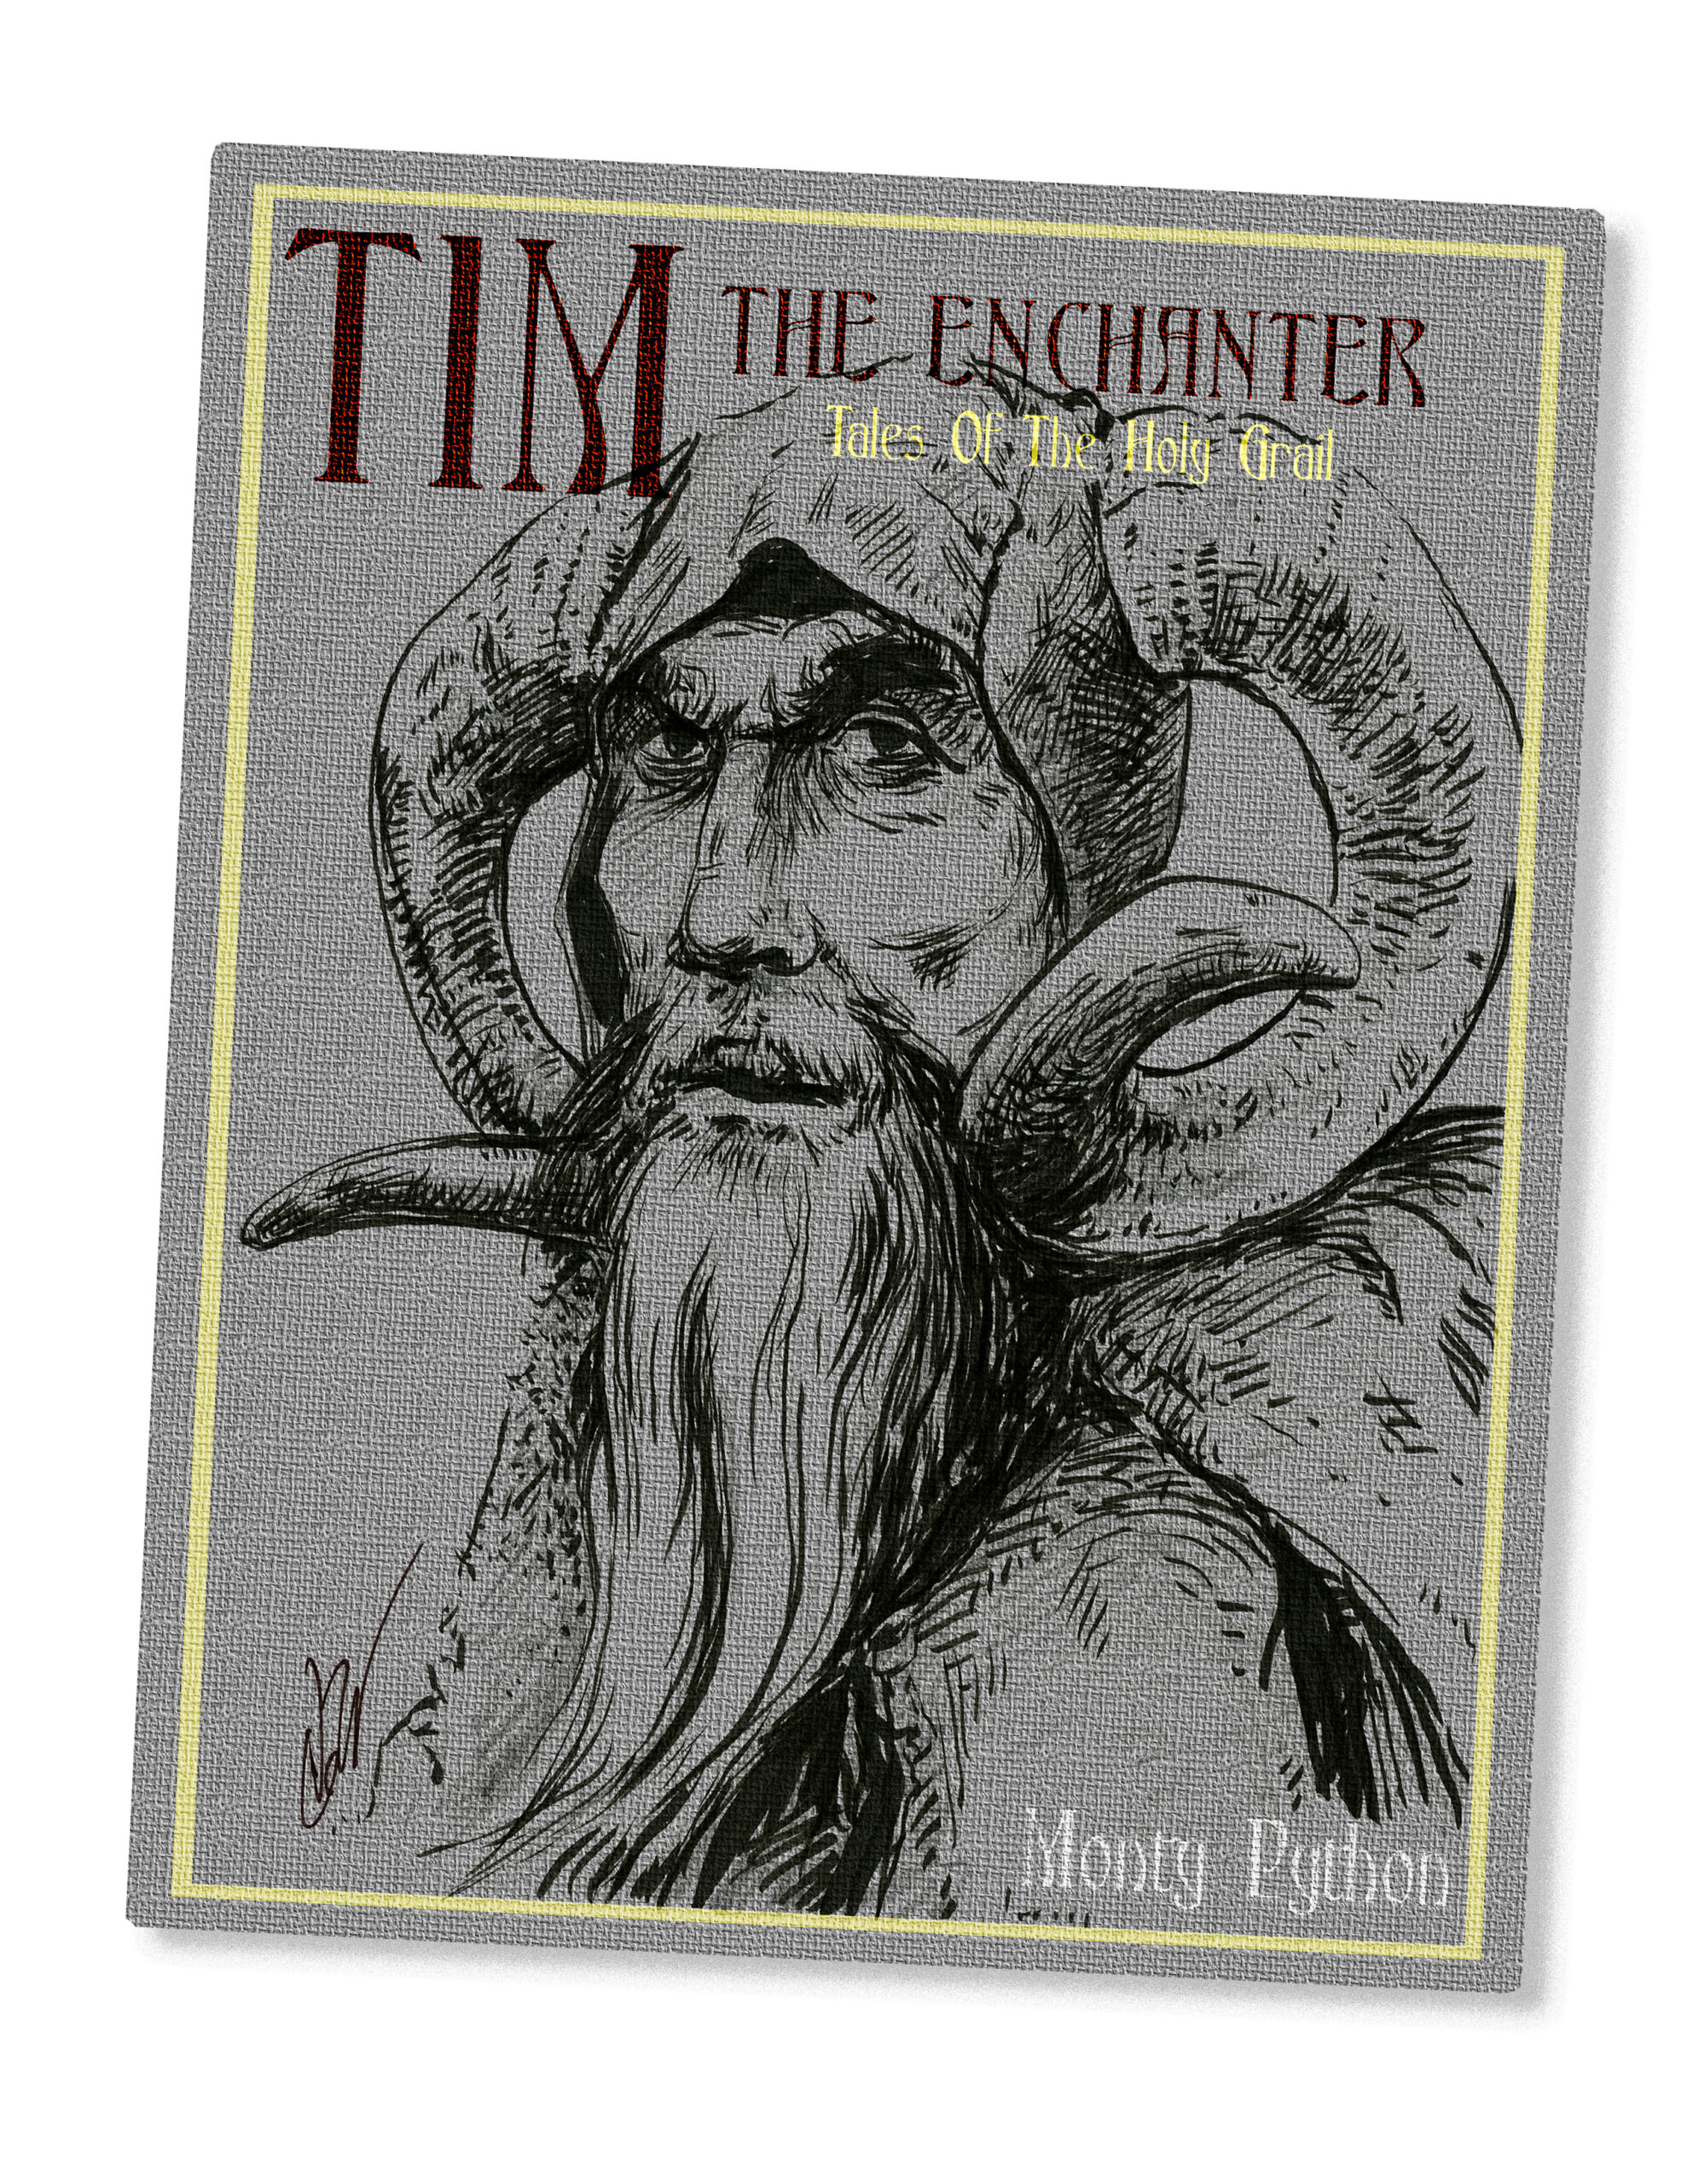 Tim the Enchanter